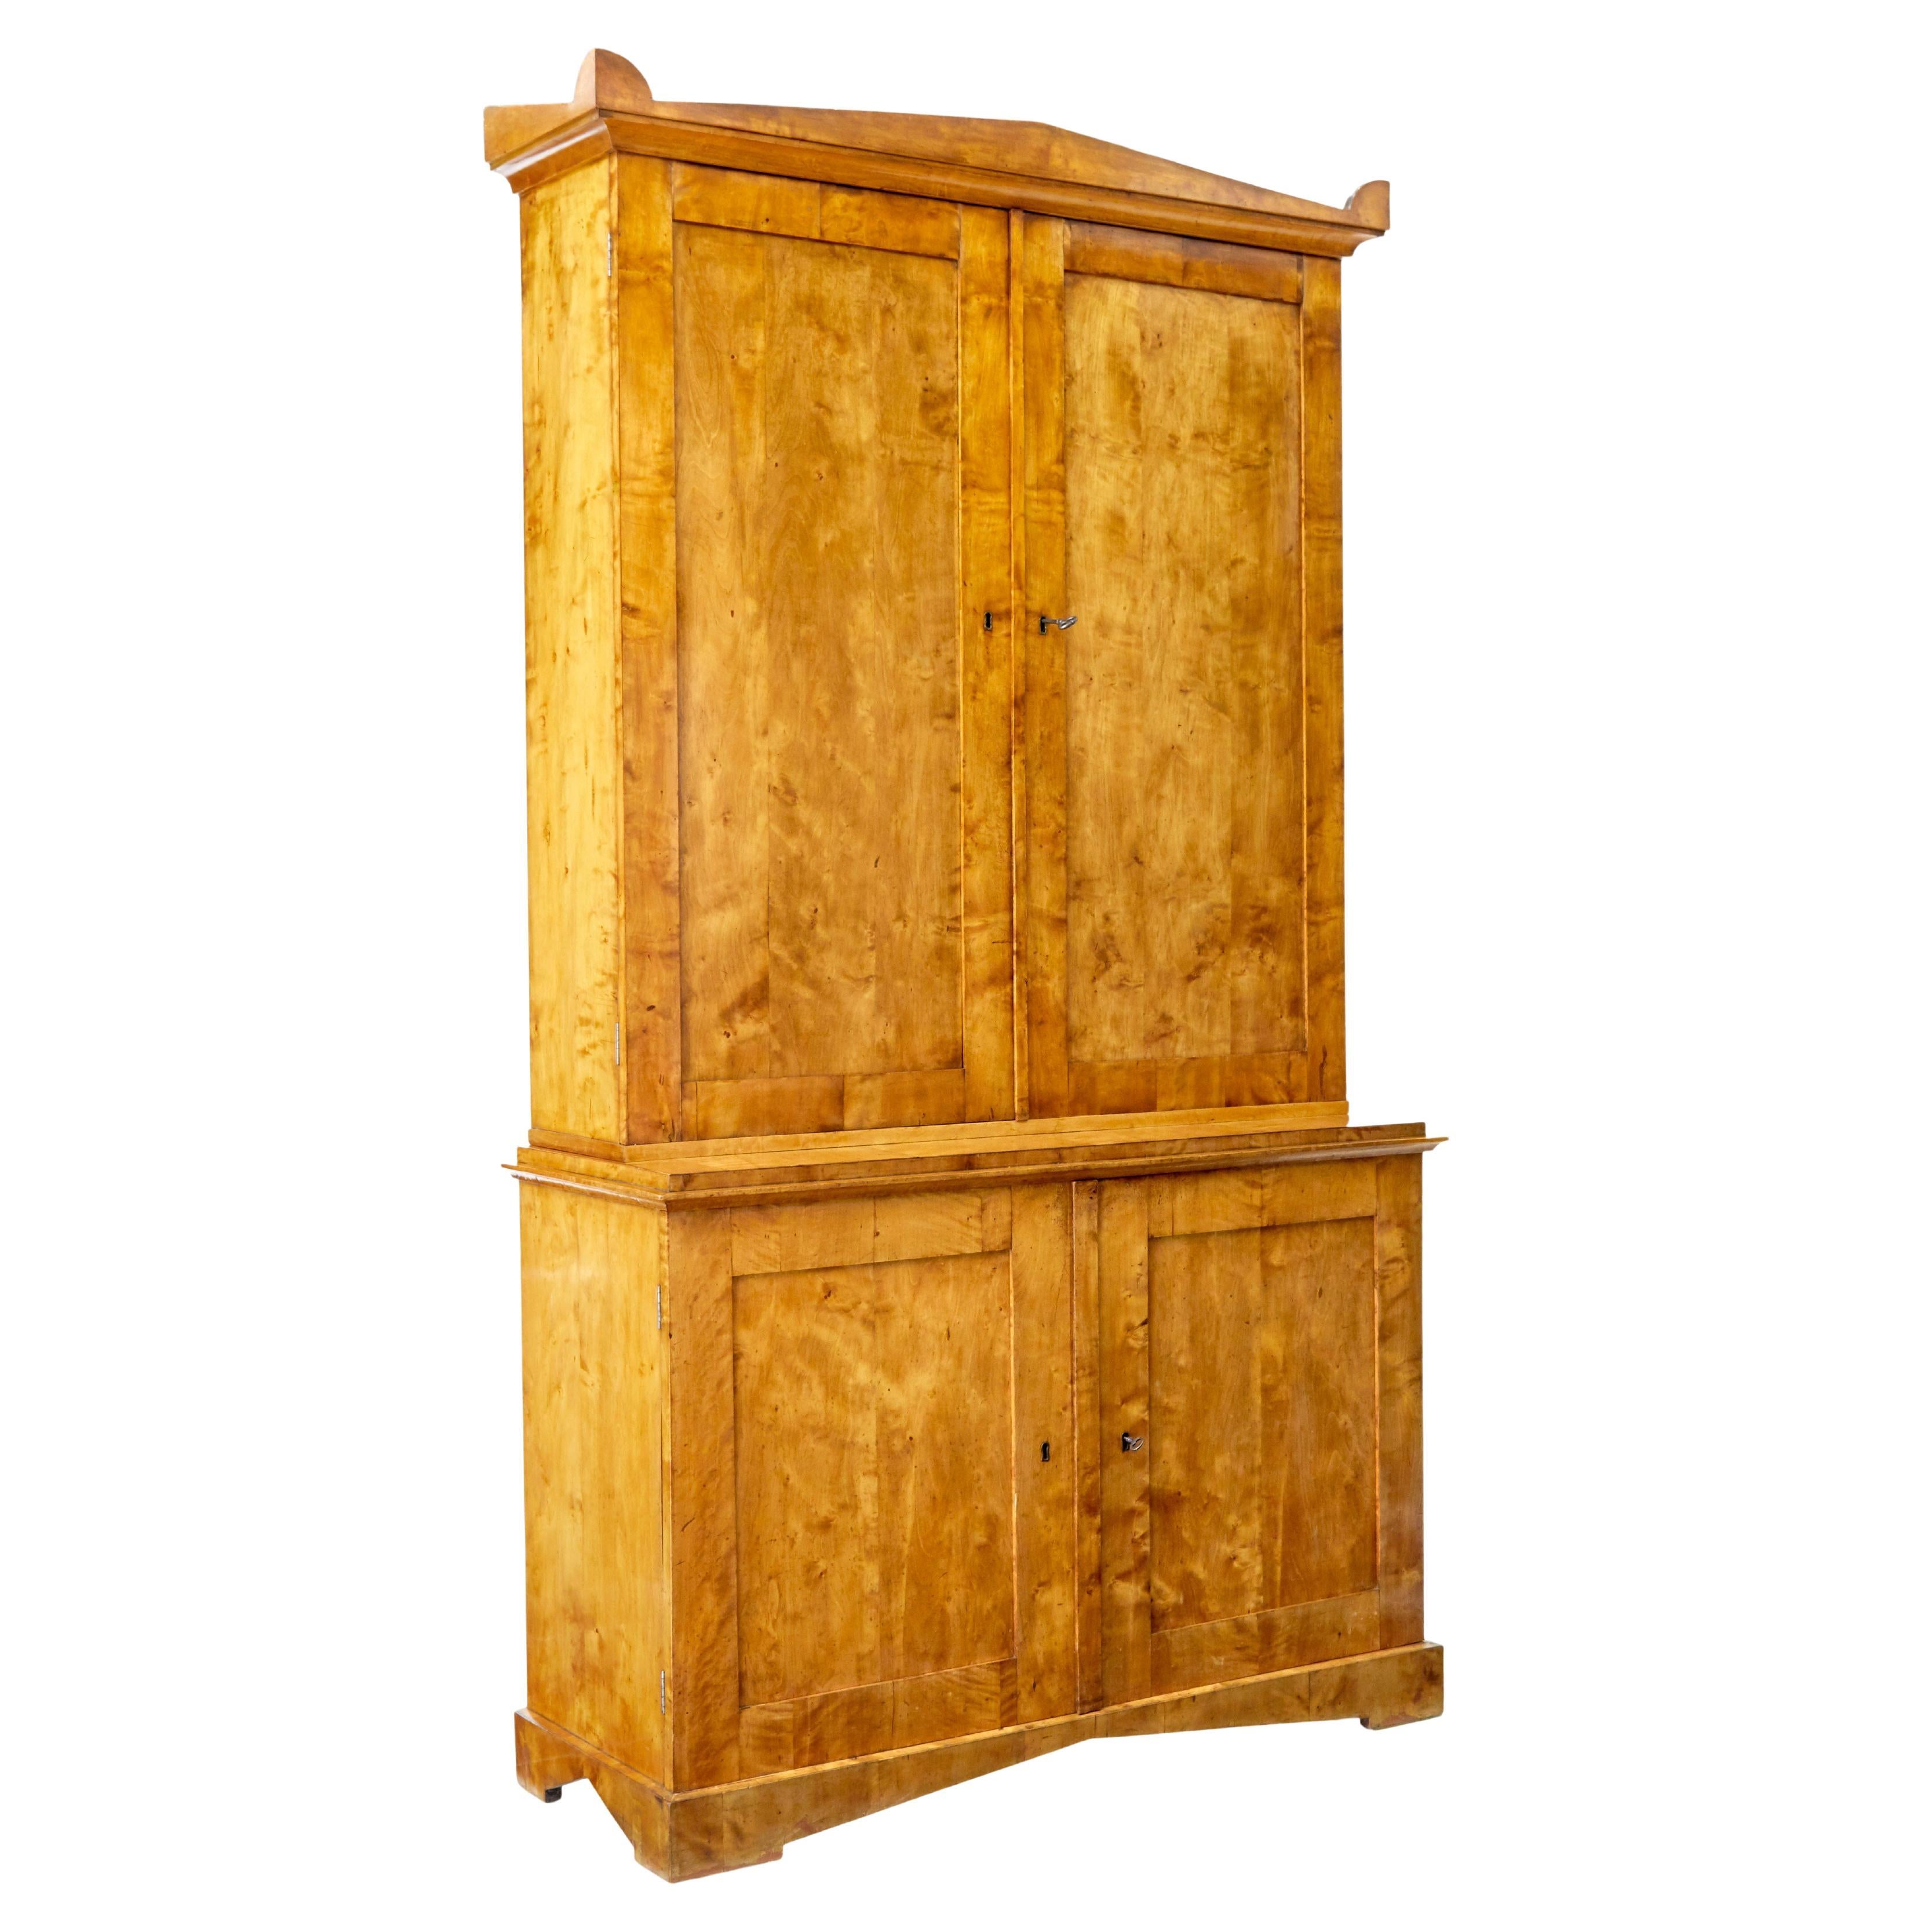 Fine quality Swedish 19th century birch cabinet